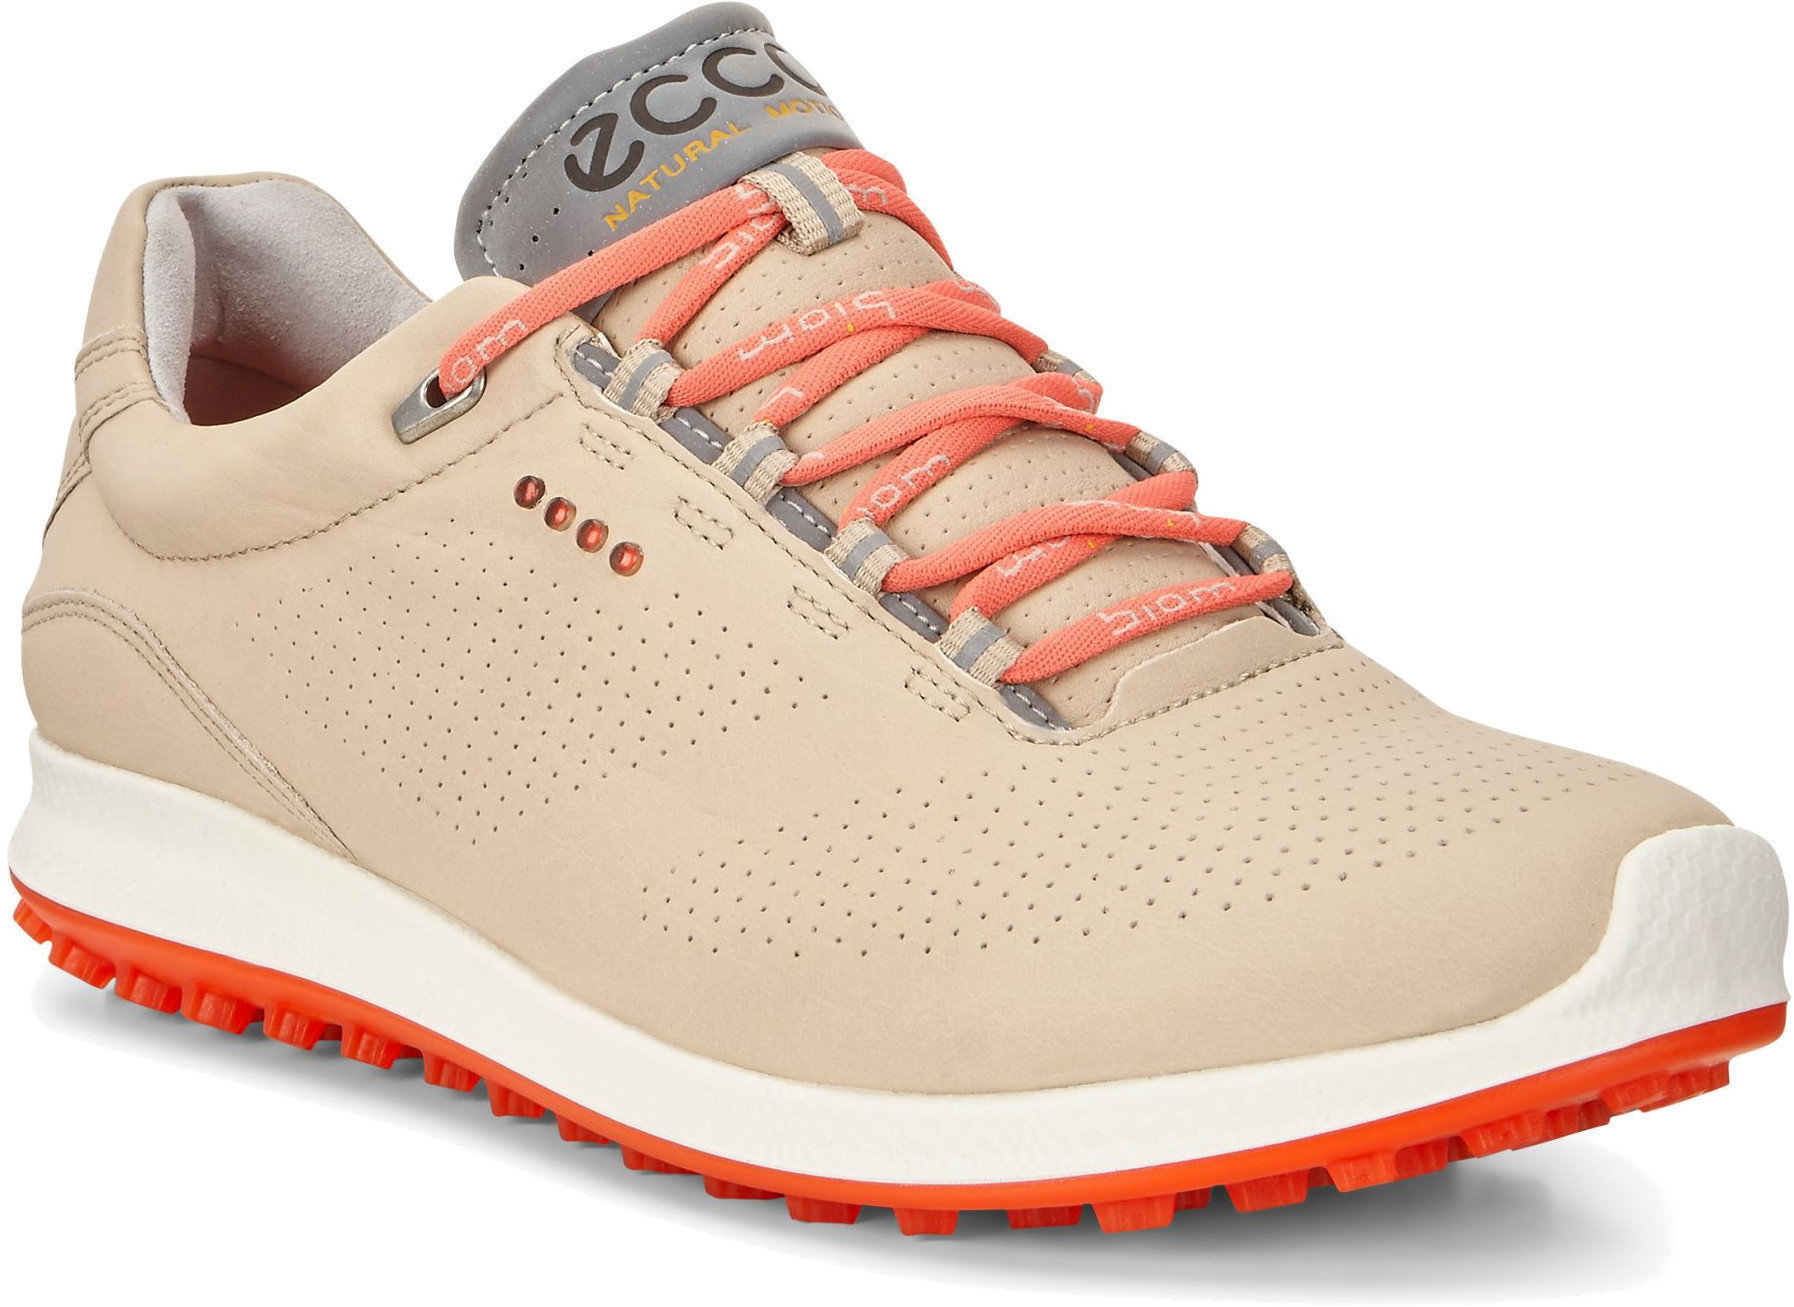 Women's golf shoes Ecco Biom Hybrid 2 Womens Golf Shoes Oyester/Coral Blush 41